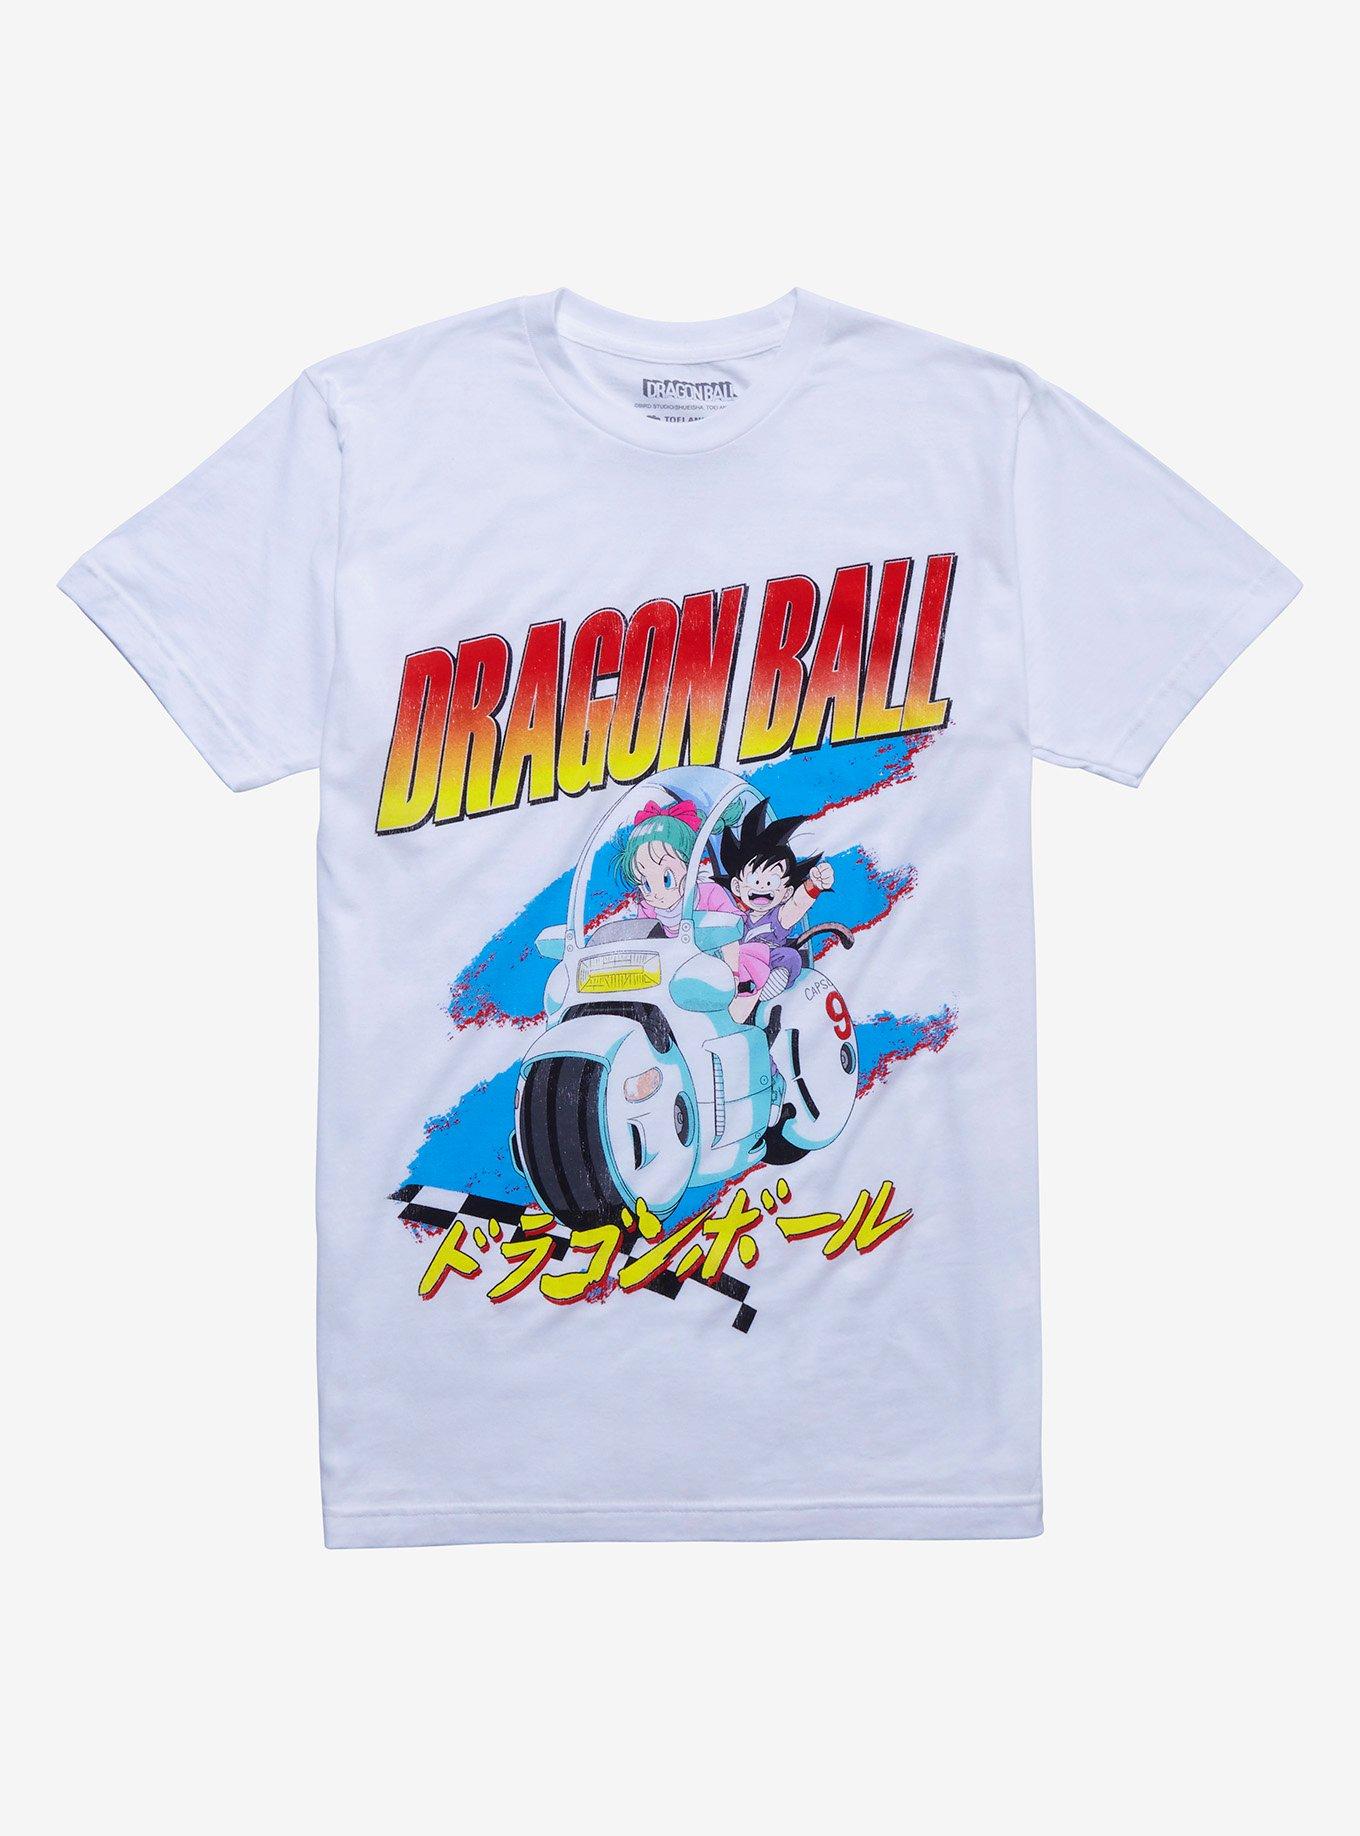 Donkey Kong & Mario bikers Classic T-Shirt by The-Diamond-Art